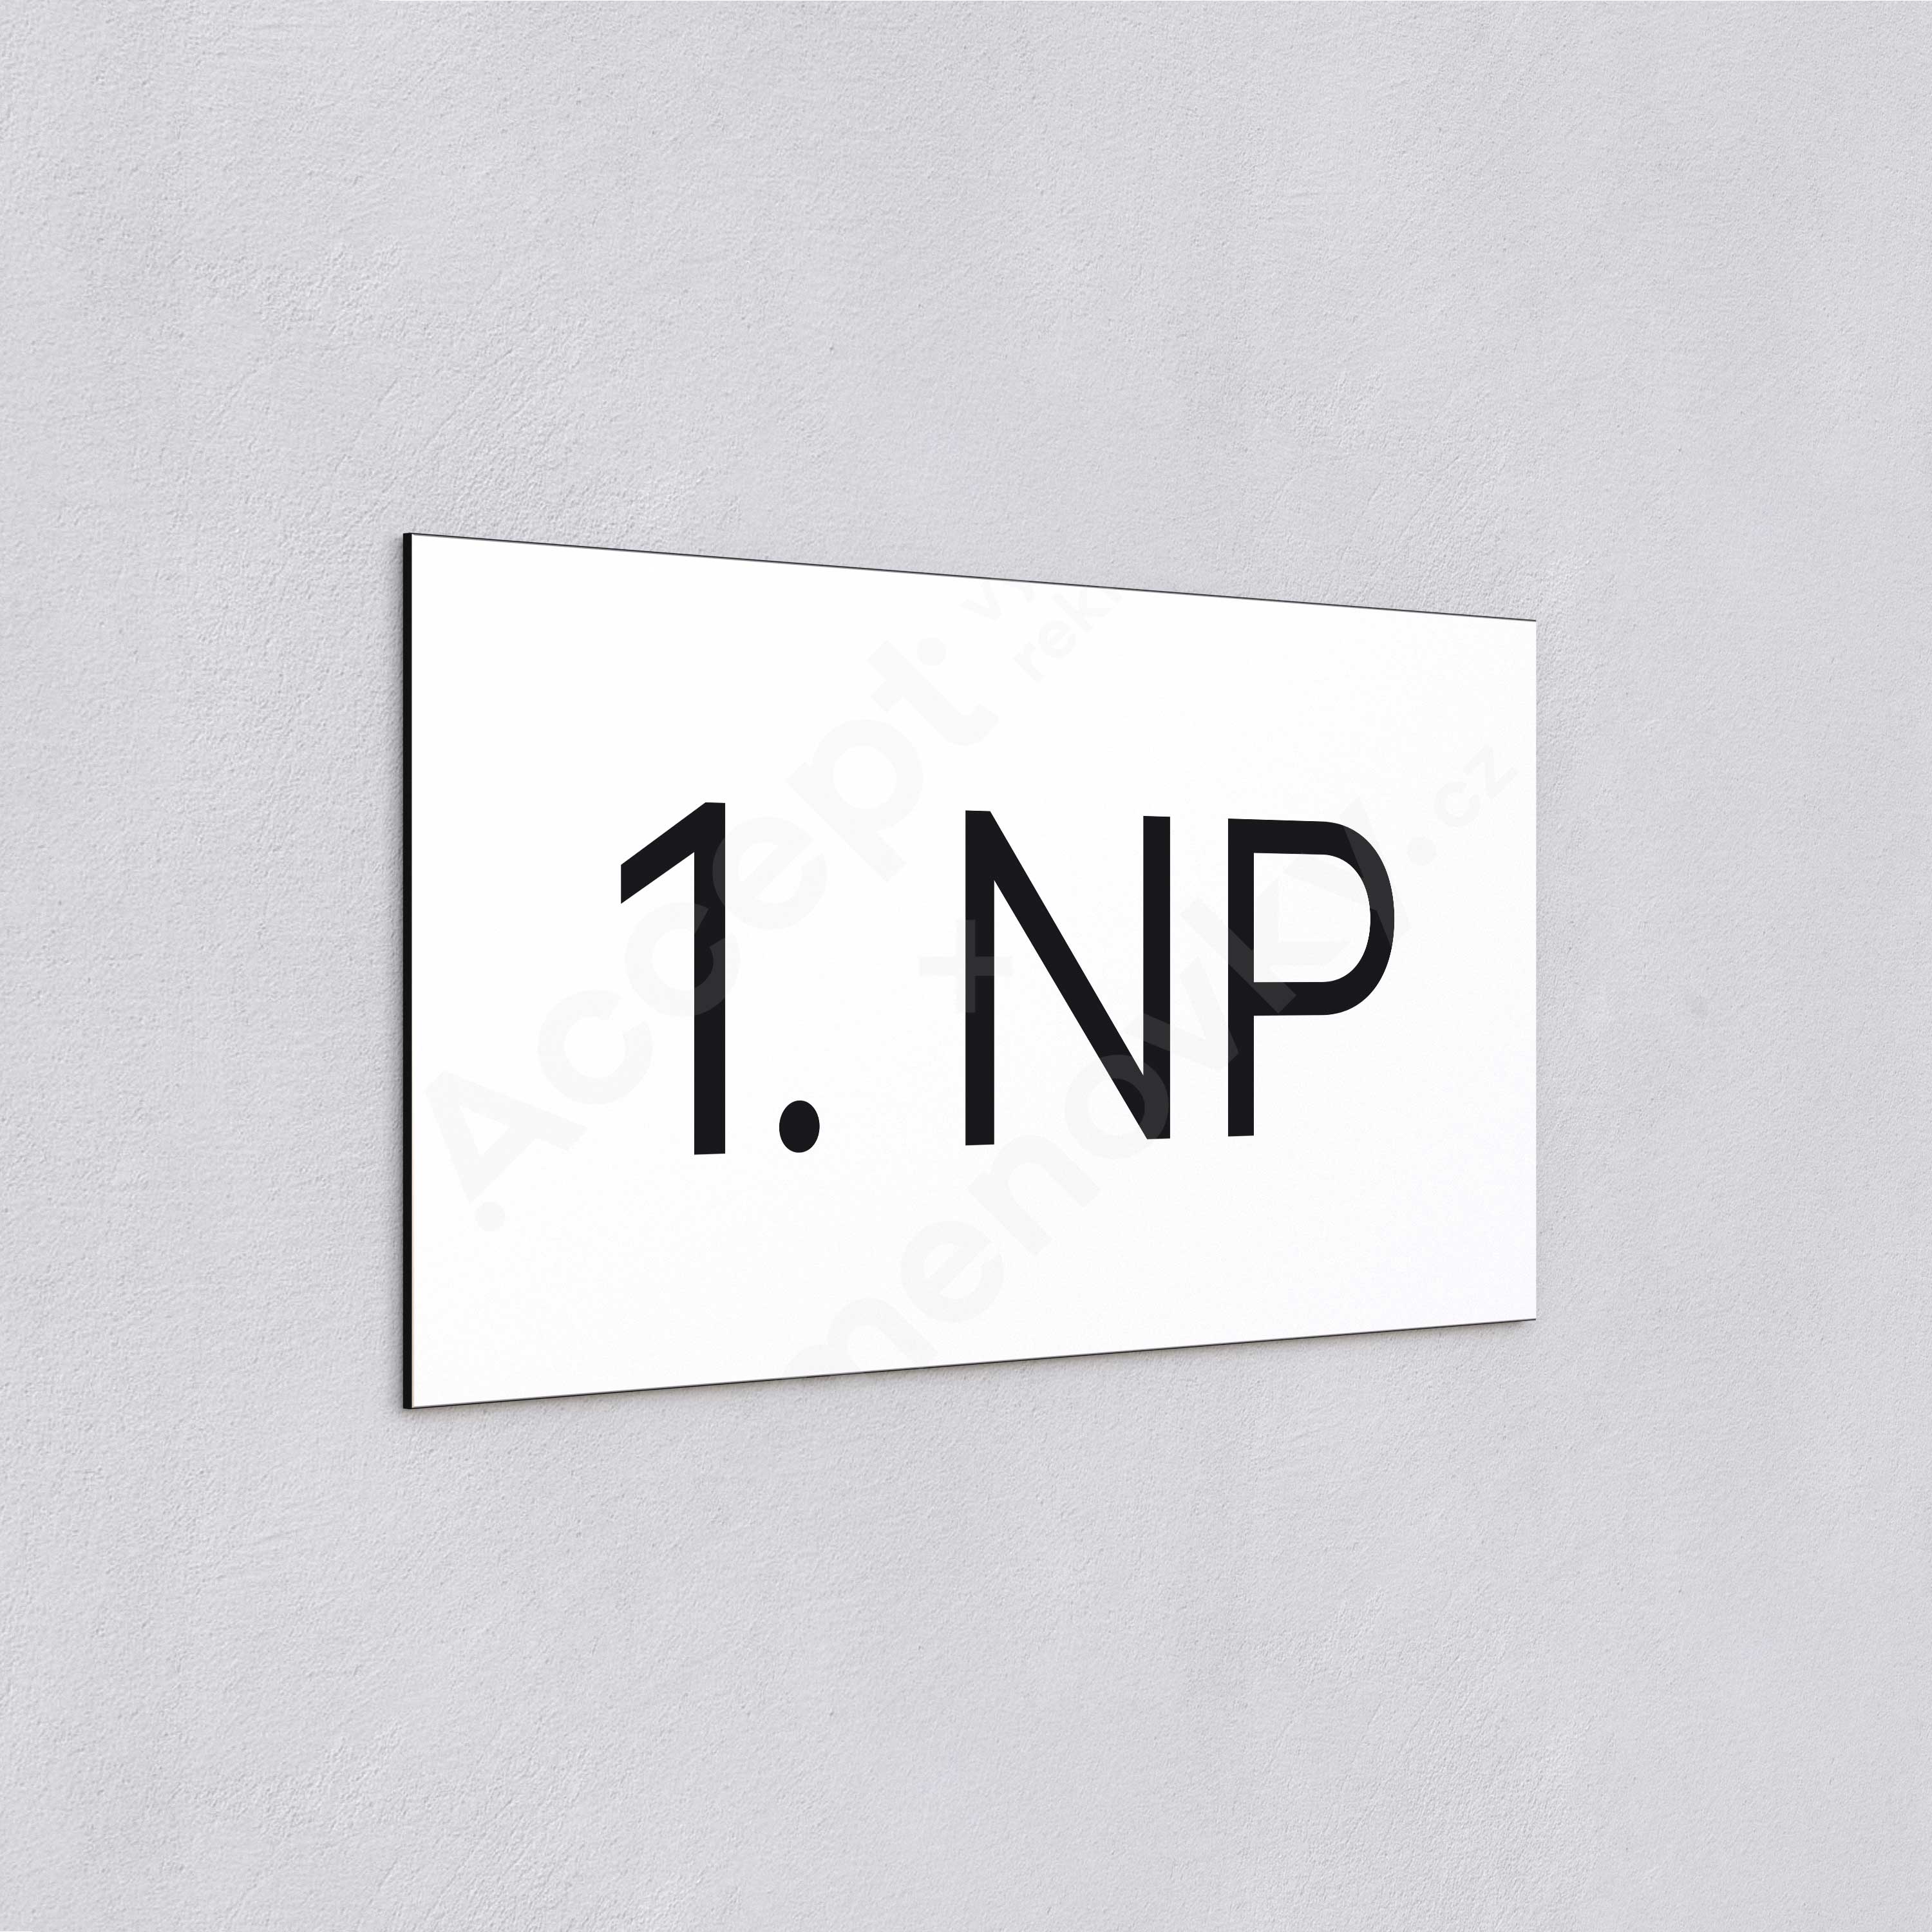 Označení podlaží "1. NP" - bílá tabulka - černý popis